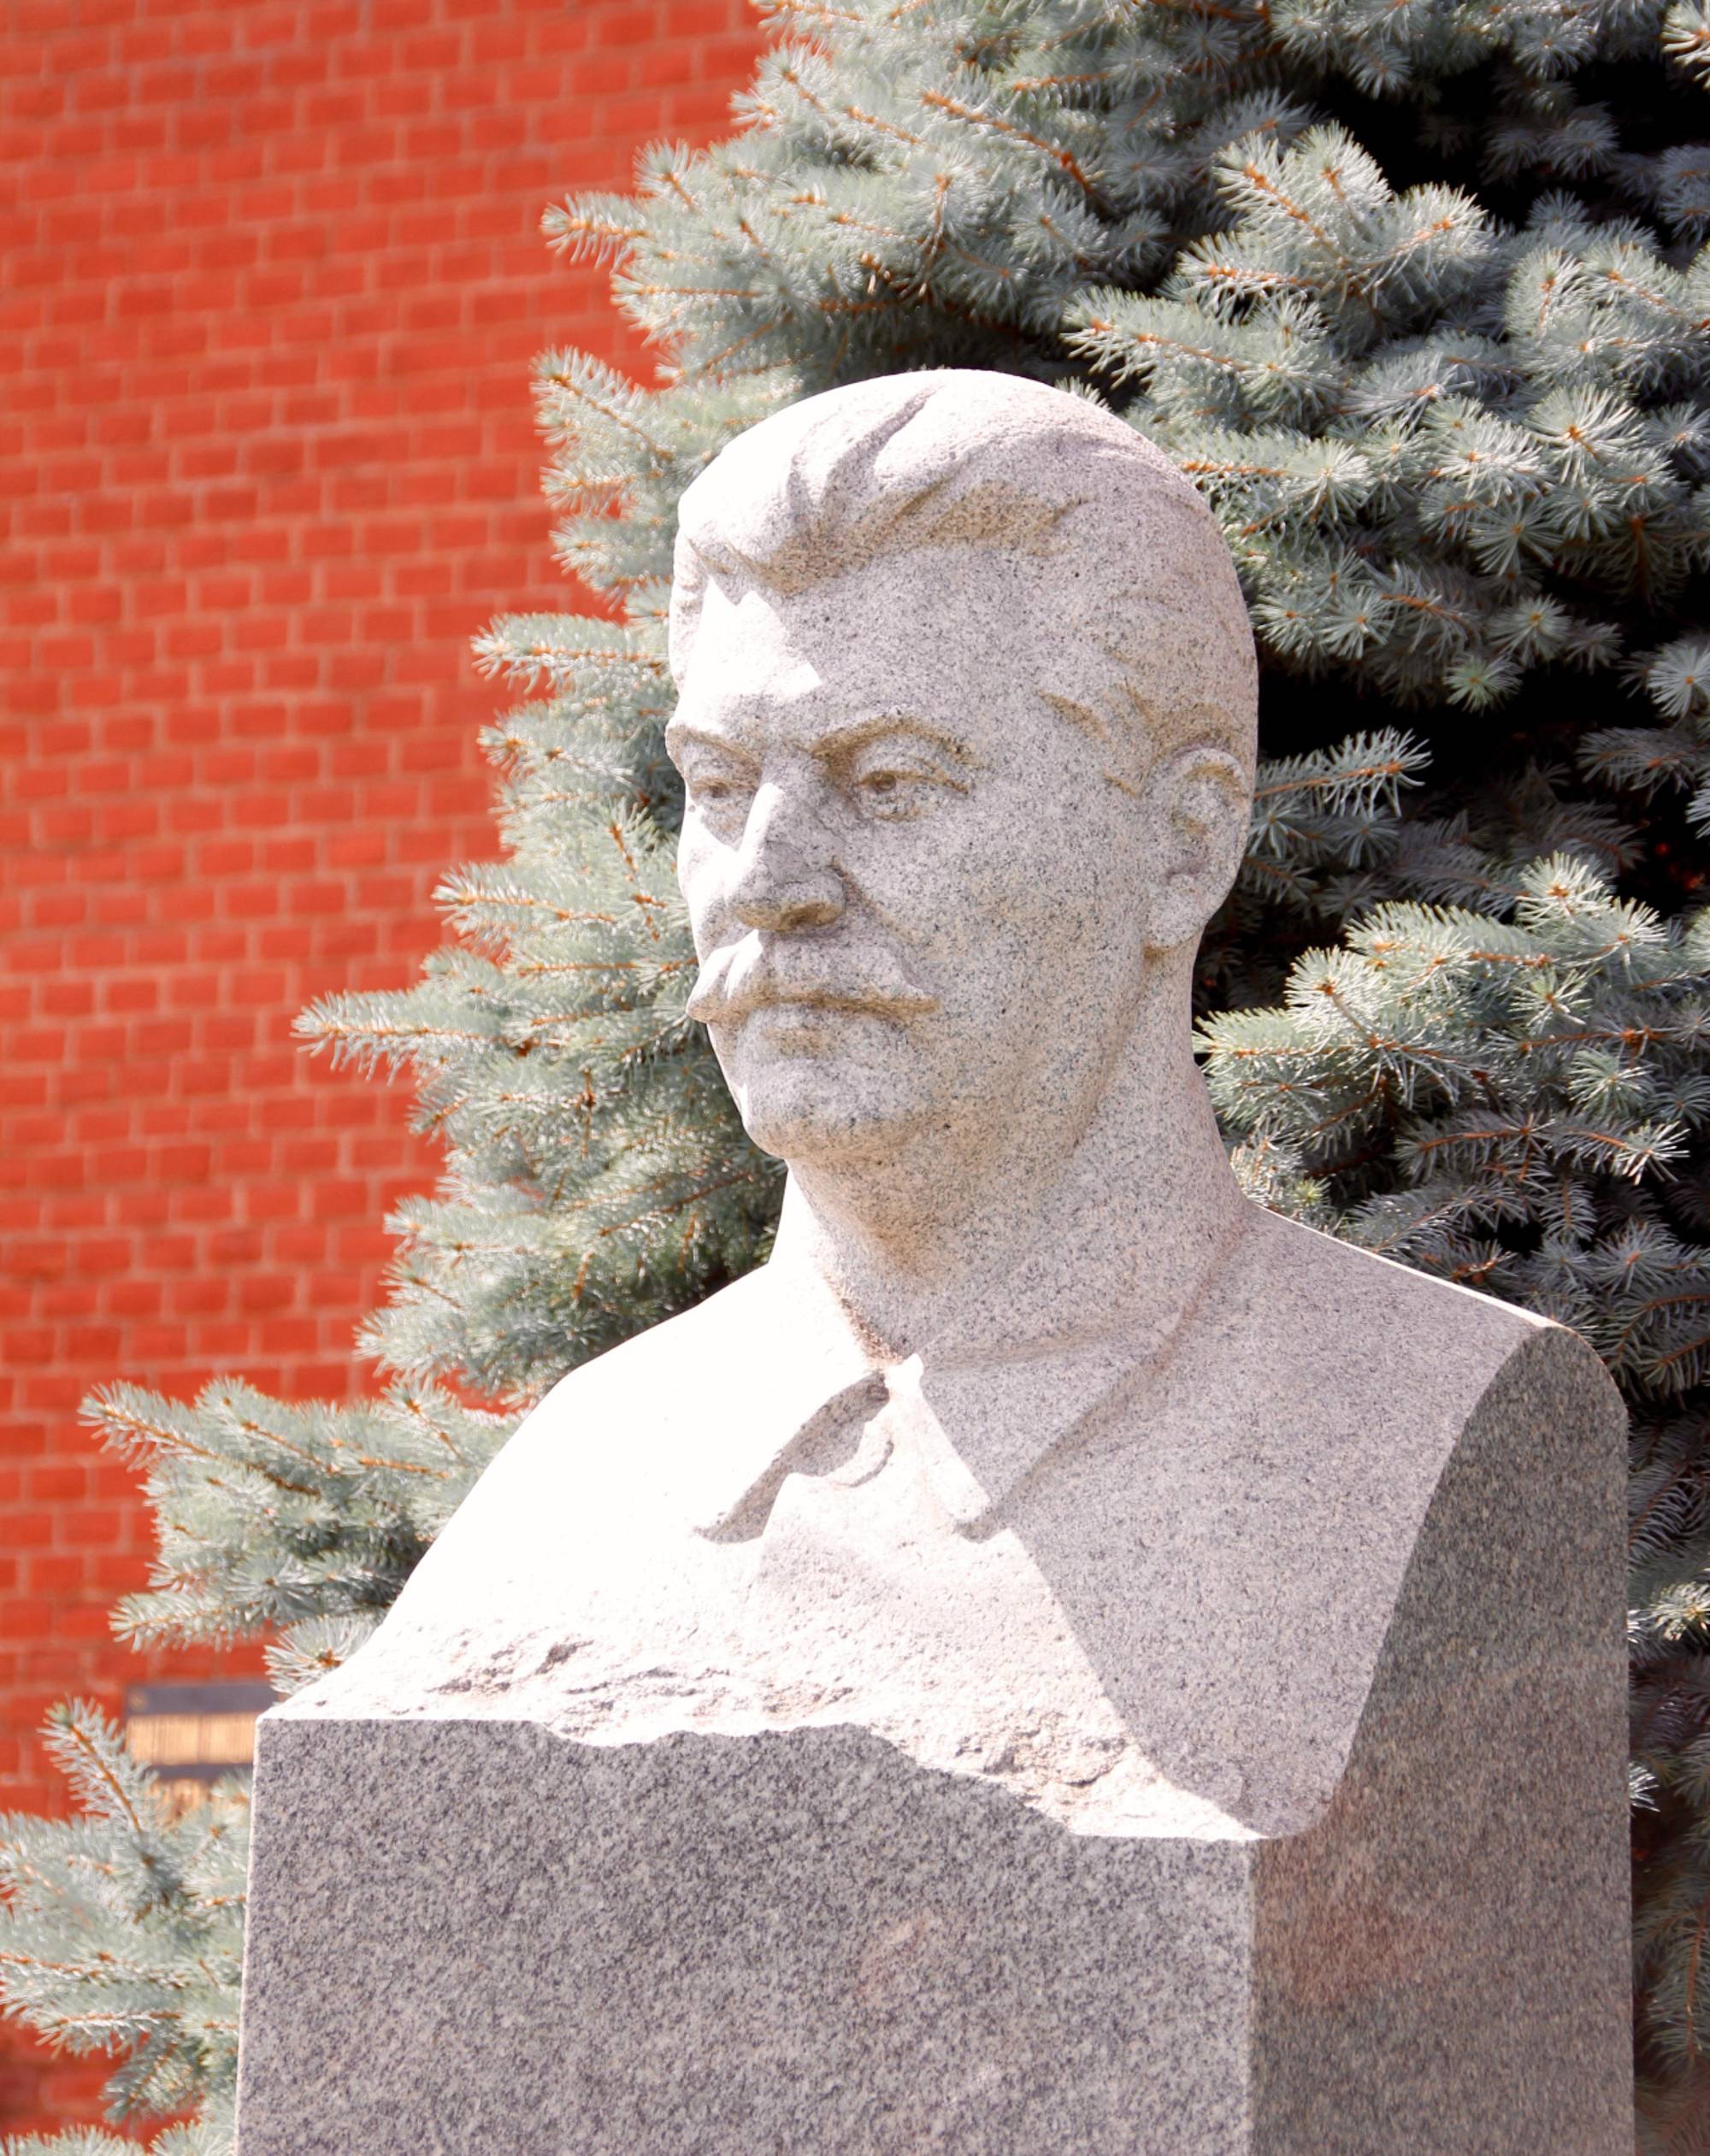 Statue of Joseph Stalin, ruler of the former Soviet Union.